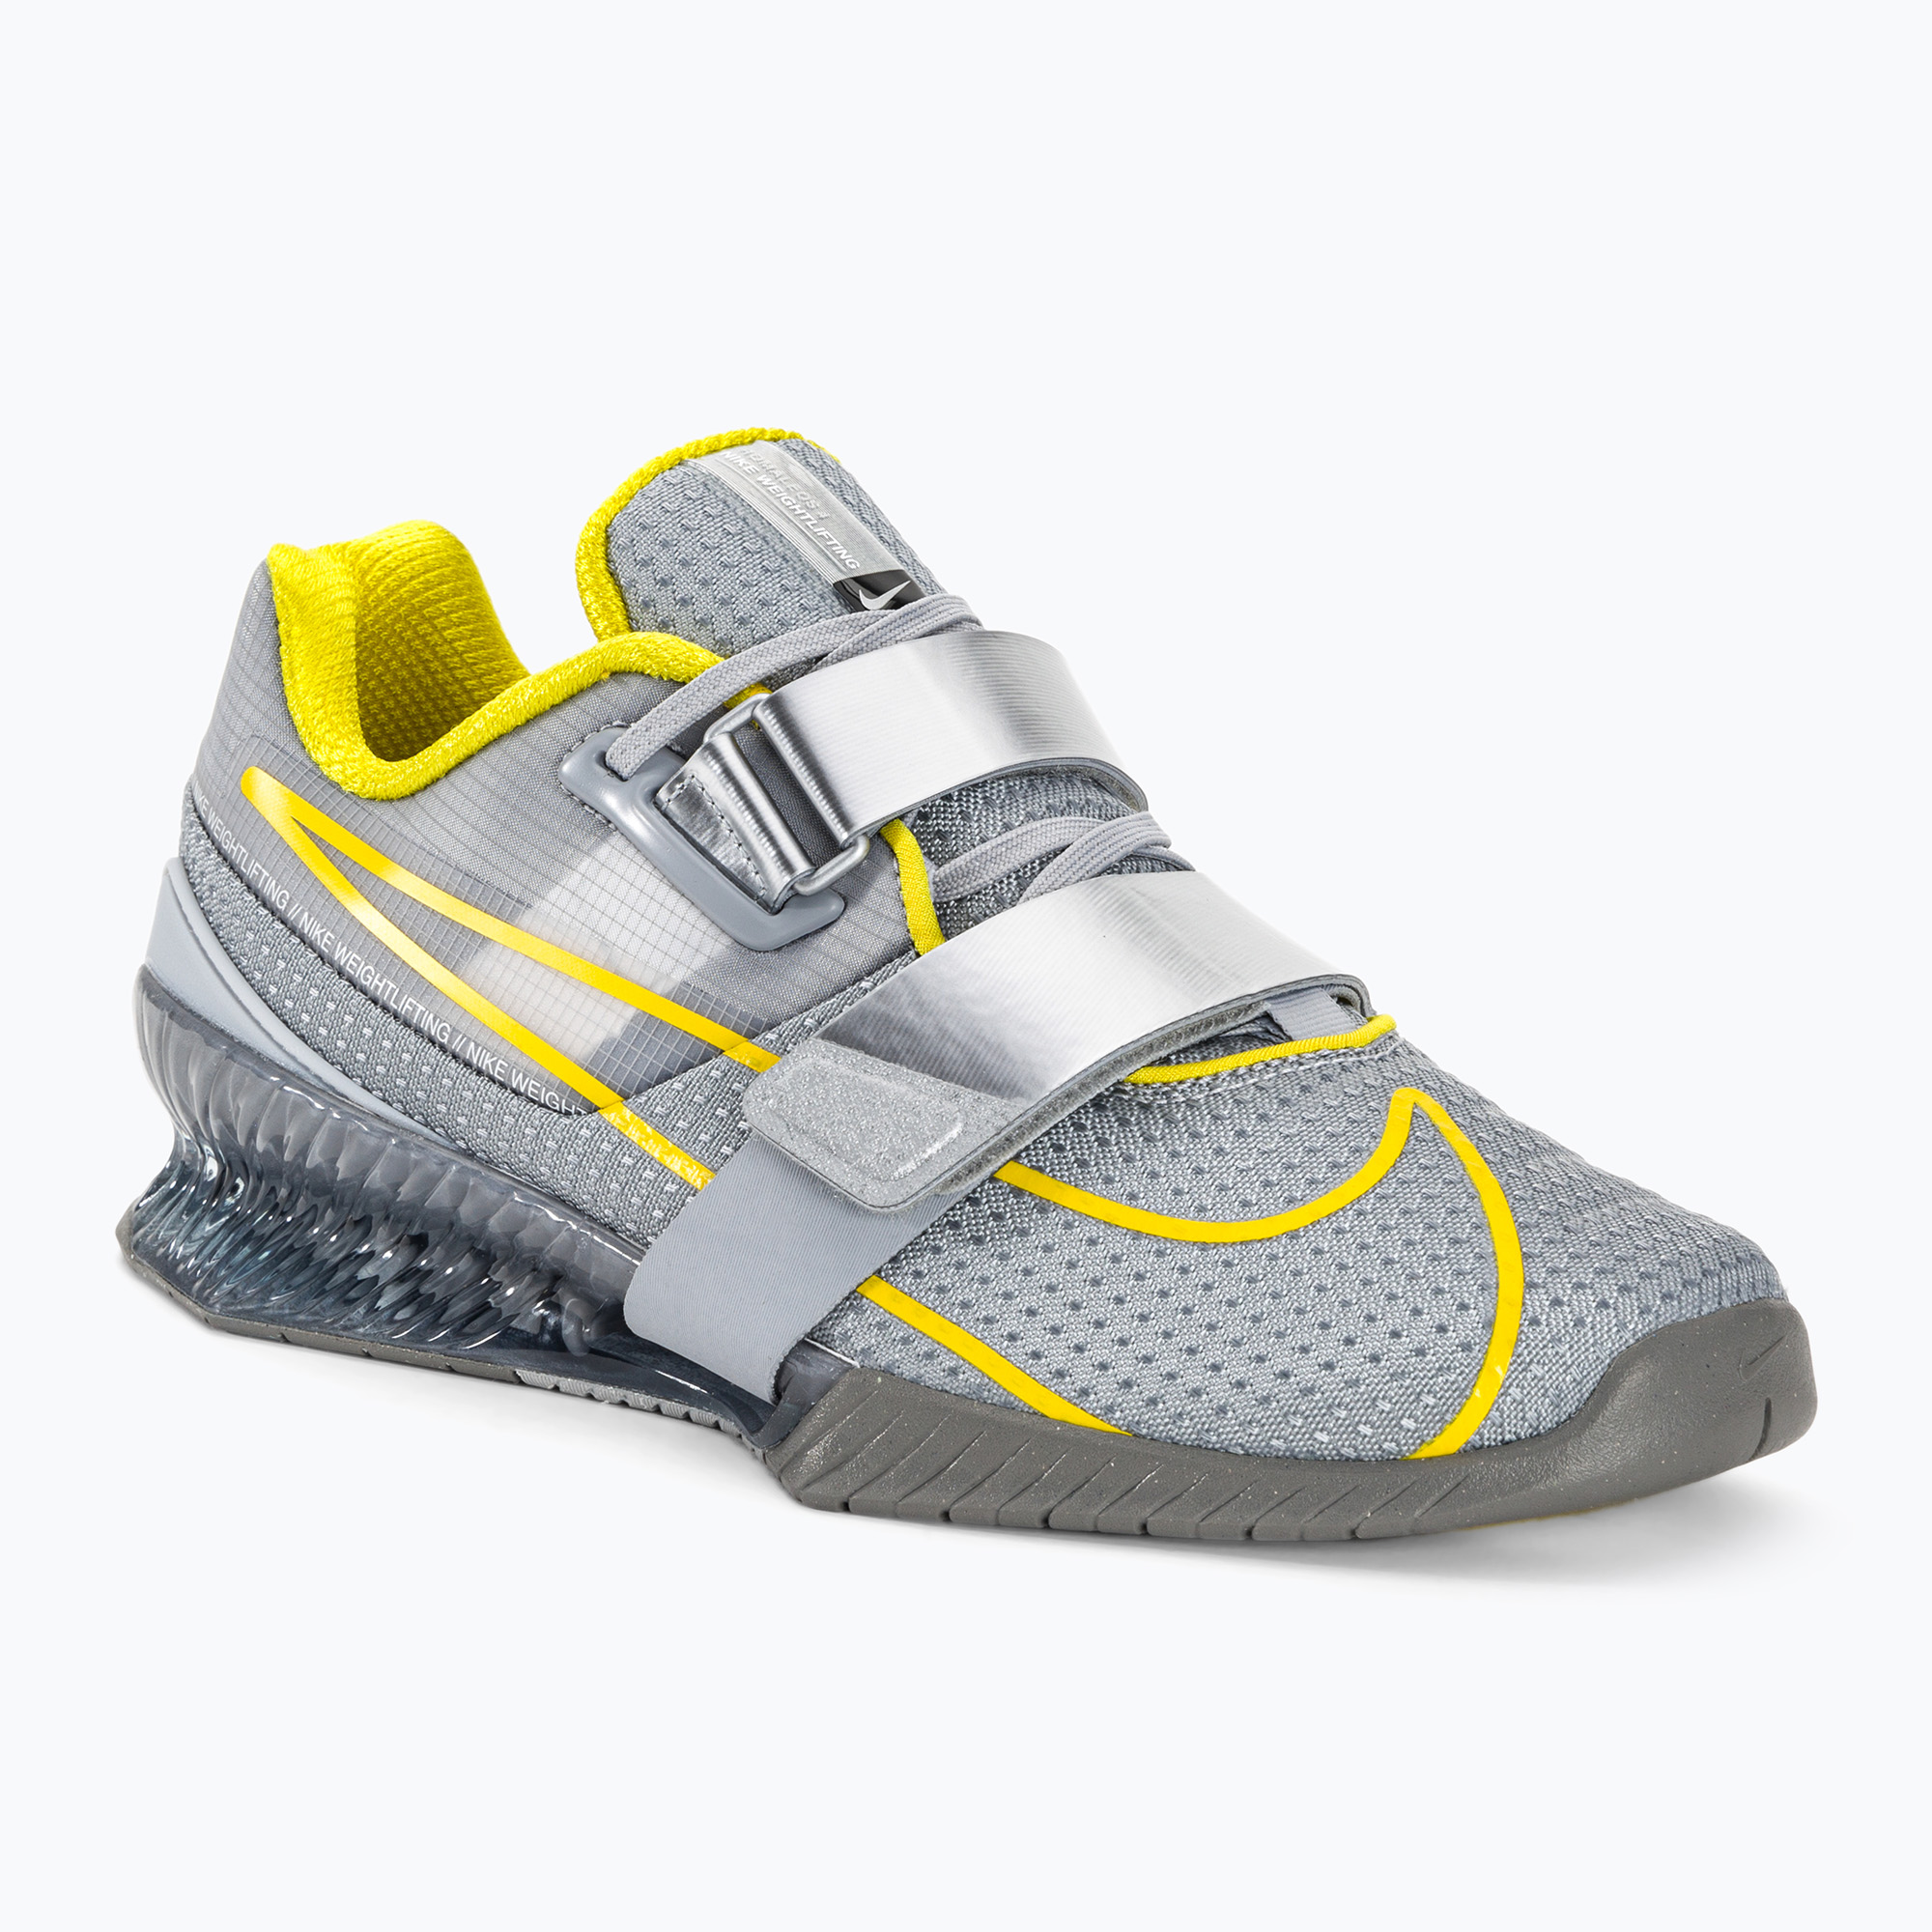 Nike Romaleos 4 haltere pantofi de haltere lup gri/luminiu/blk met argint